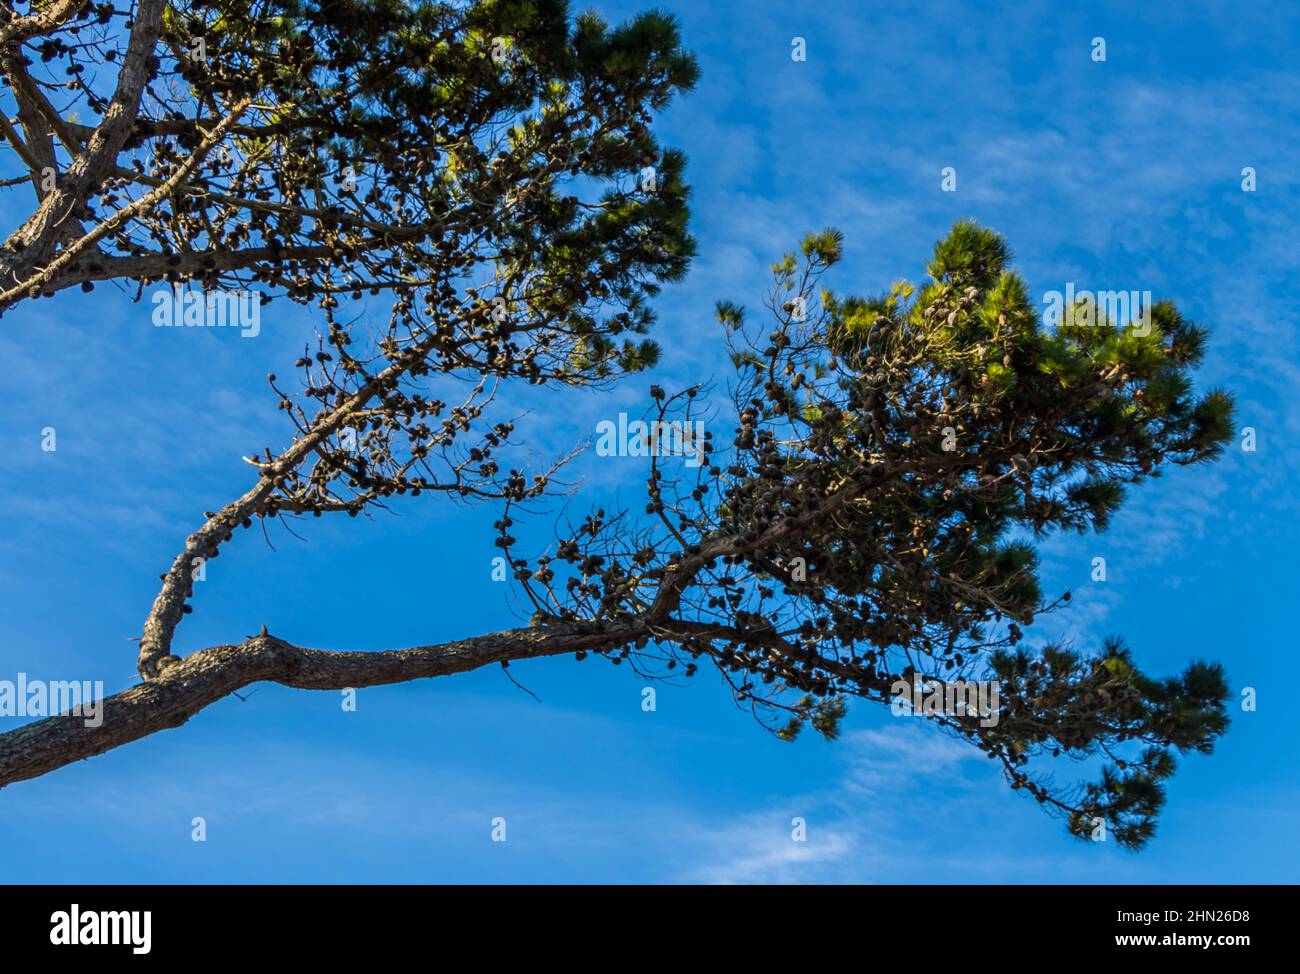 A fir tree against a blue sky near Bognor Regis, West Sussex, UK. Stock Photo